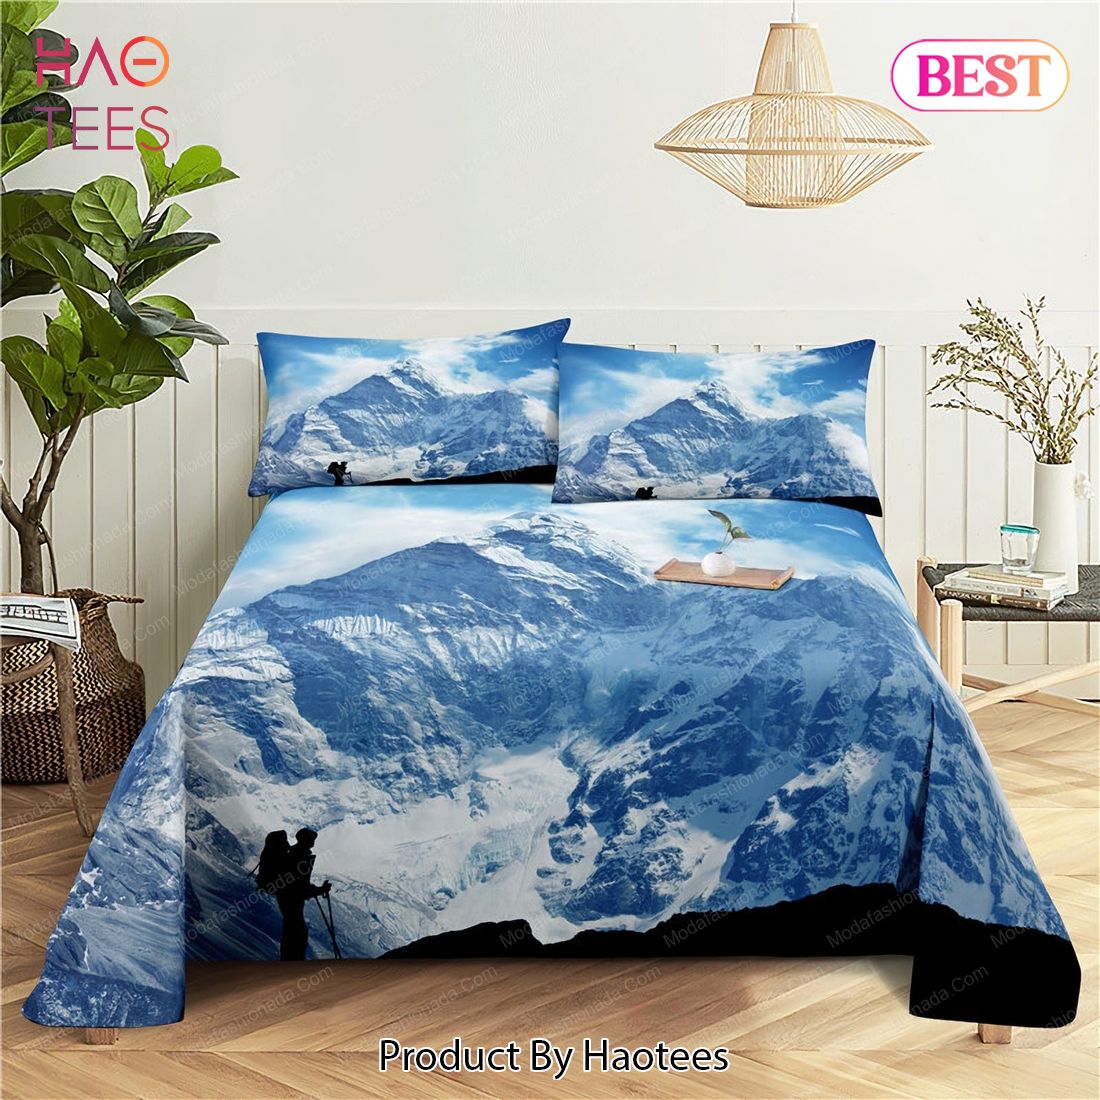 Buy Beautiful Mountain Scenery 269 Bedding Sets Bed Sets, Bedroom Sets, Comforter Sets, Duvet Cover, Bedspread